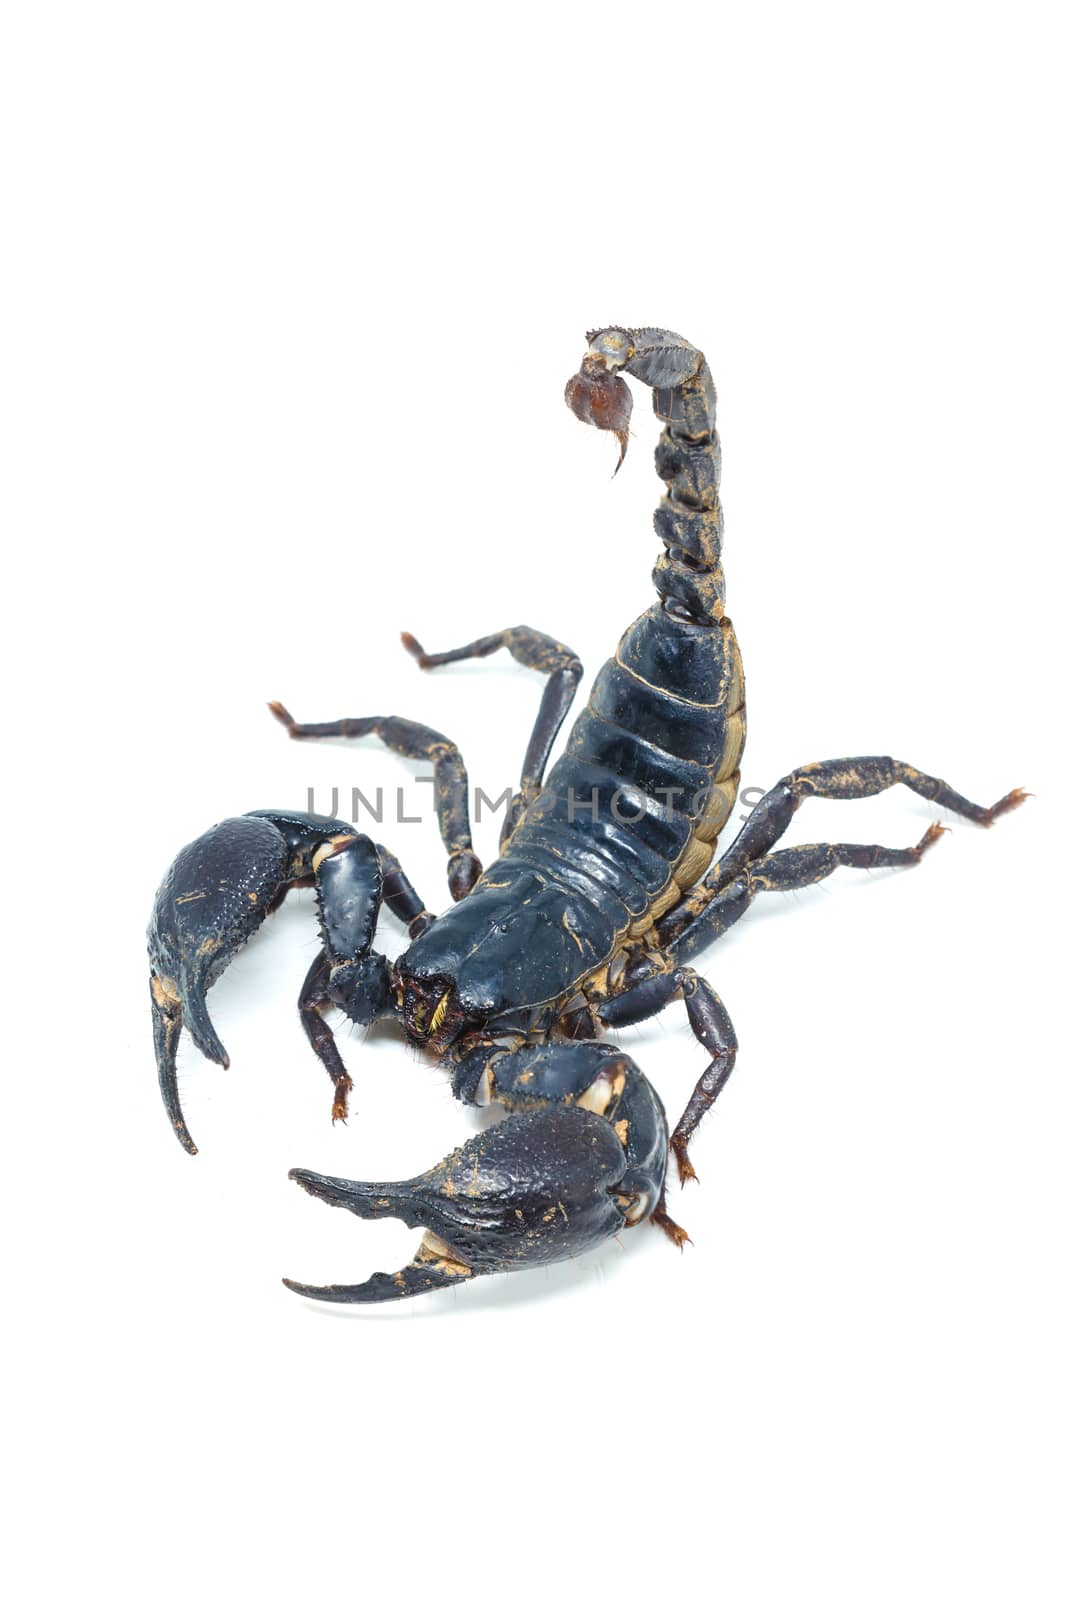 Scorpion isolated on white background by Natstocker